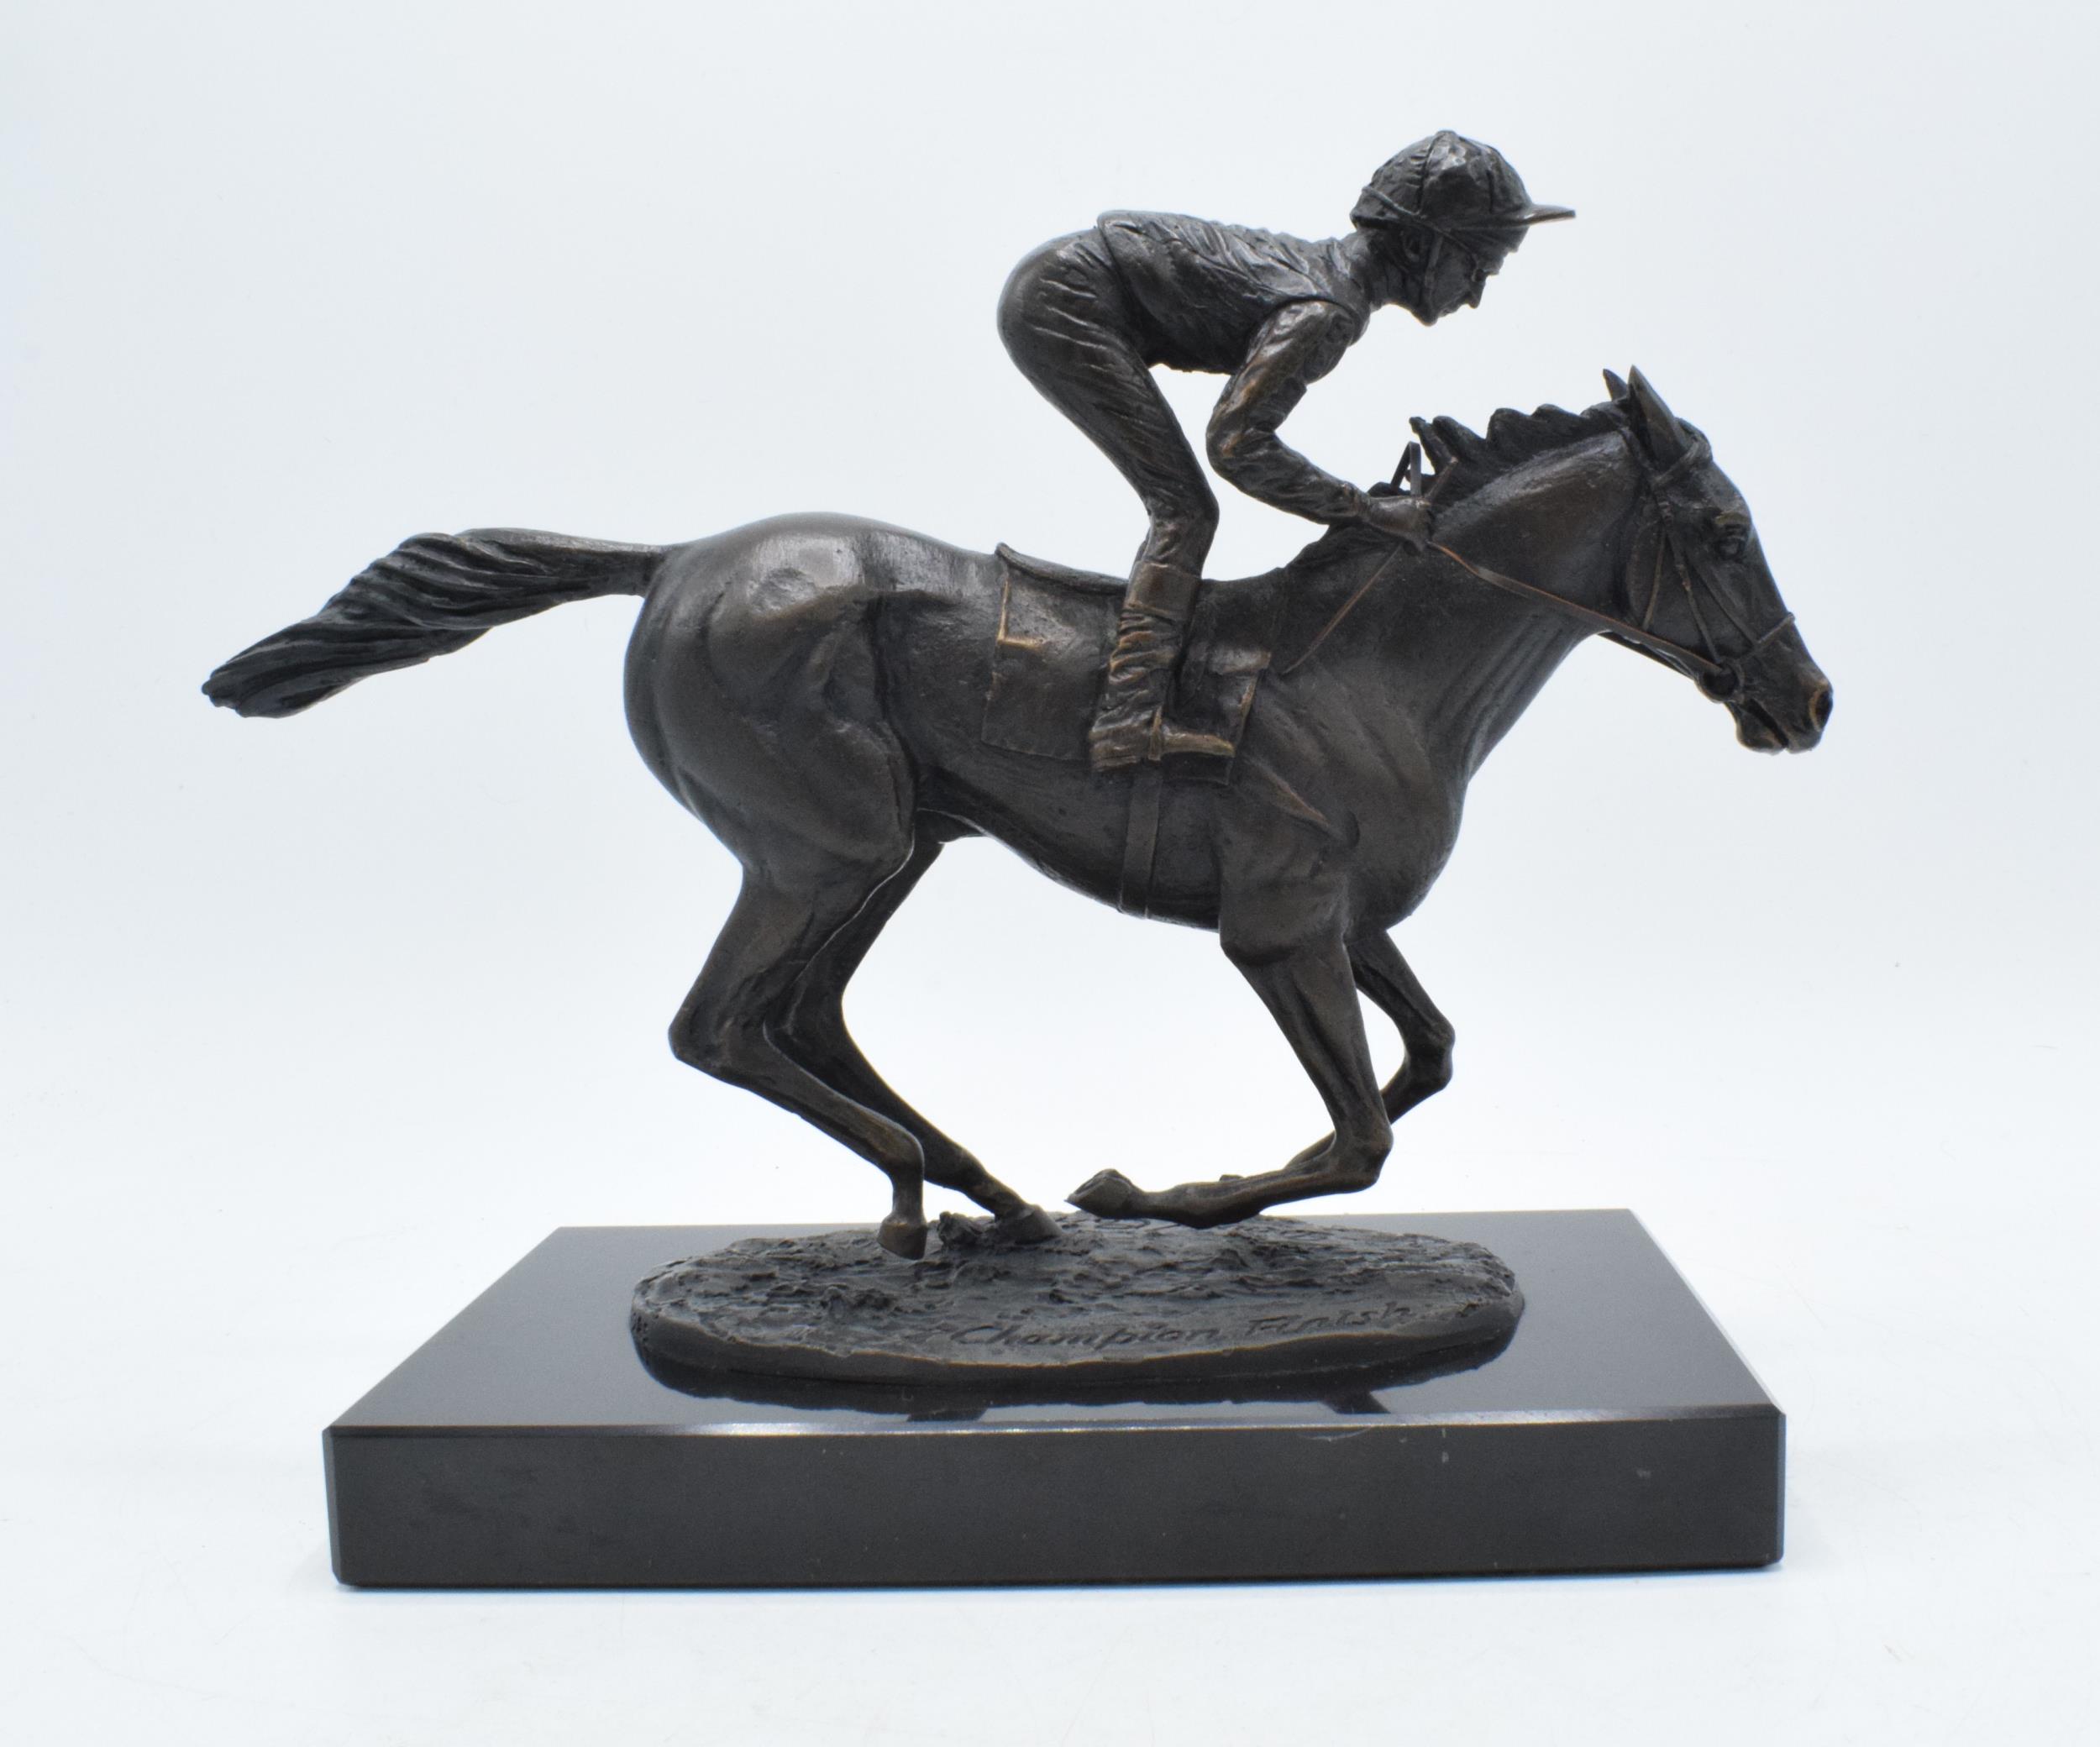 A bronze statue of "Champion Finish"showing Lester Piggott on Nijinsky modelled by David Cornell